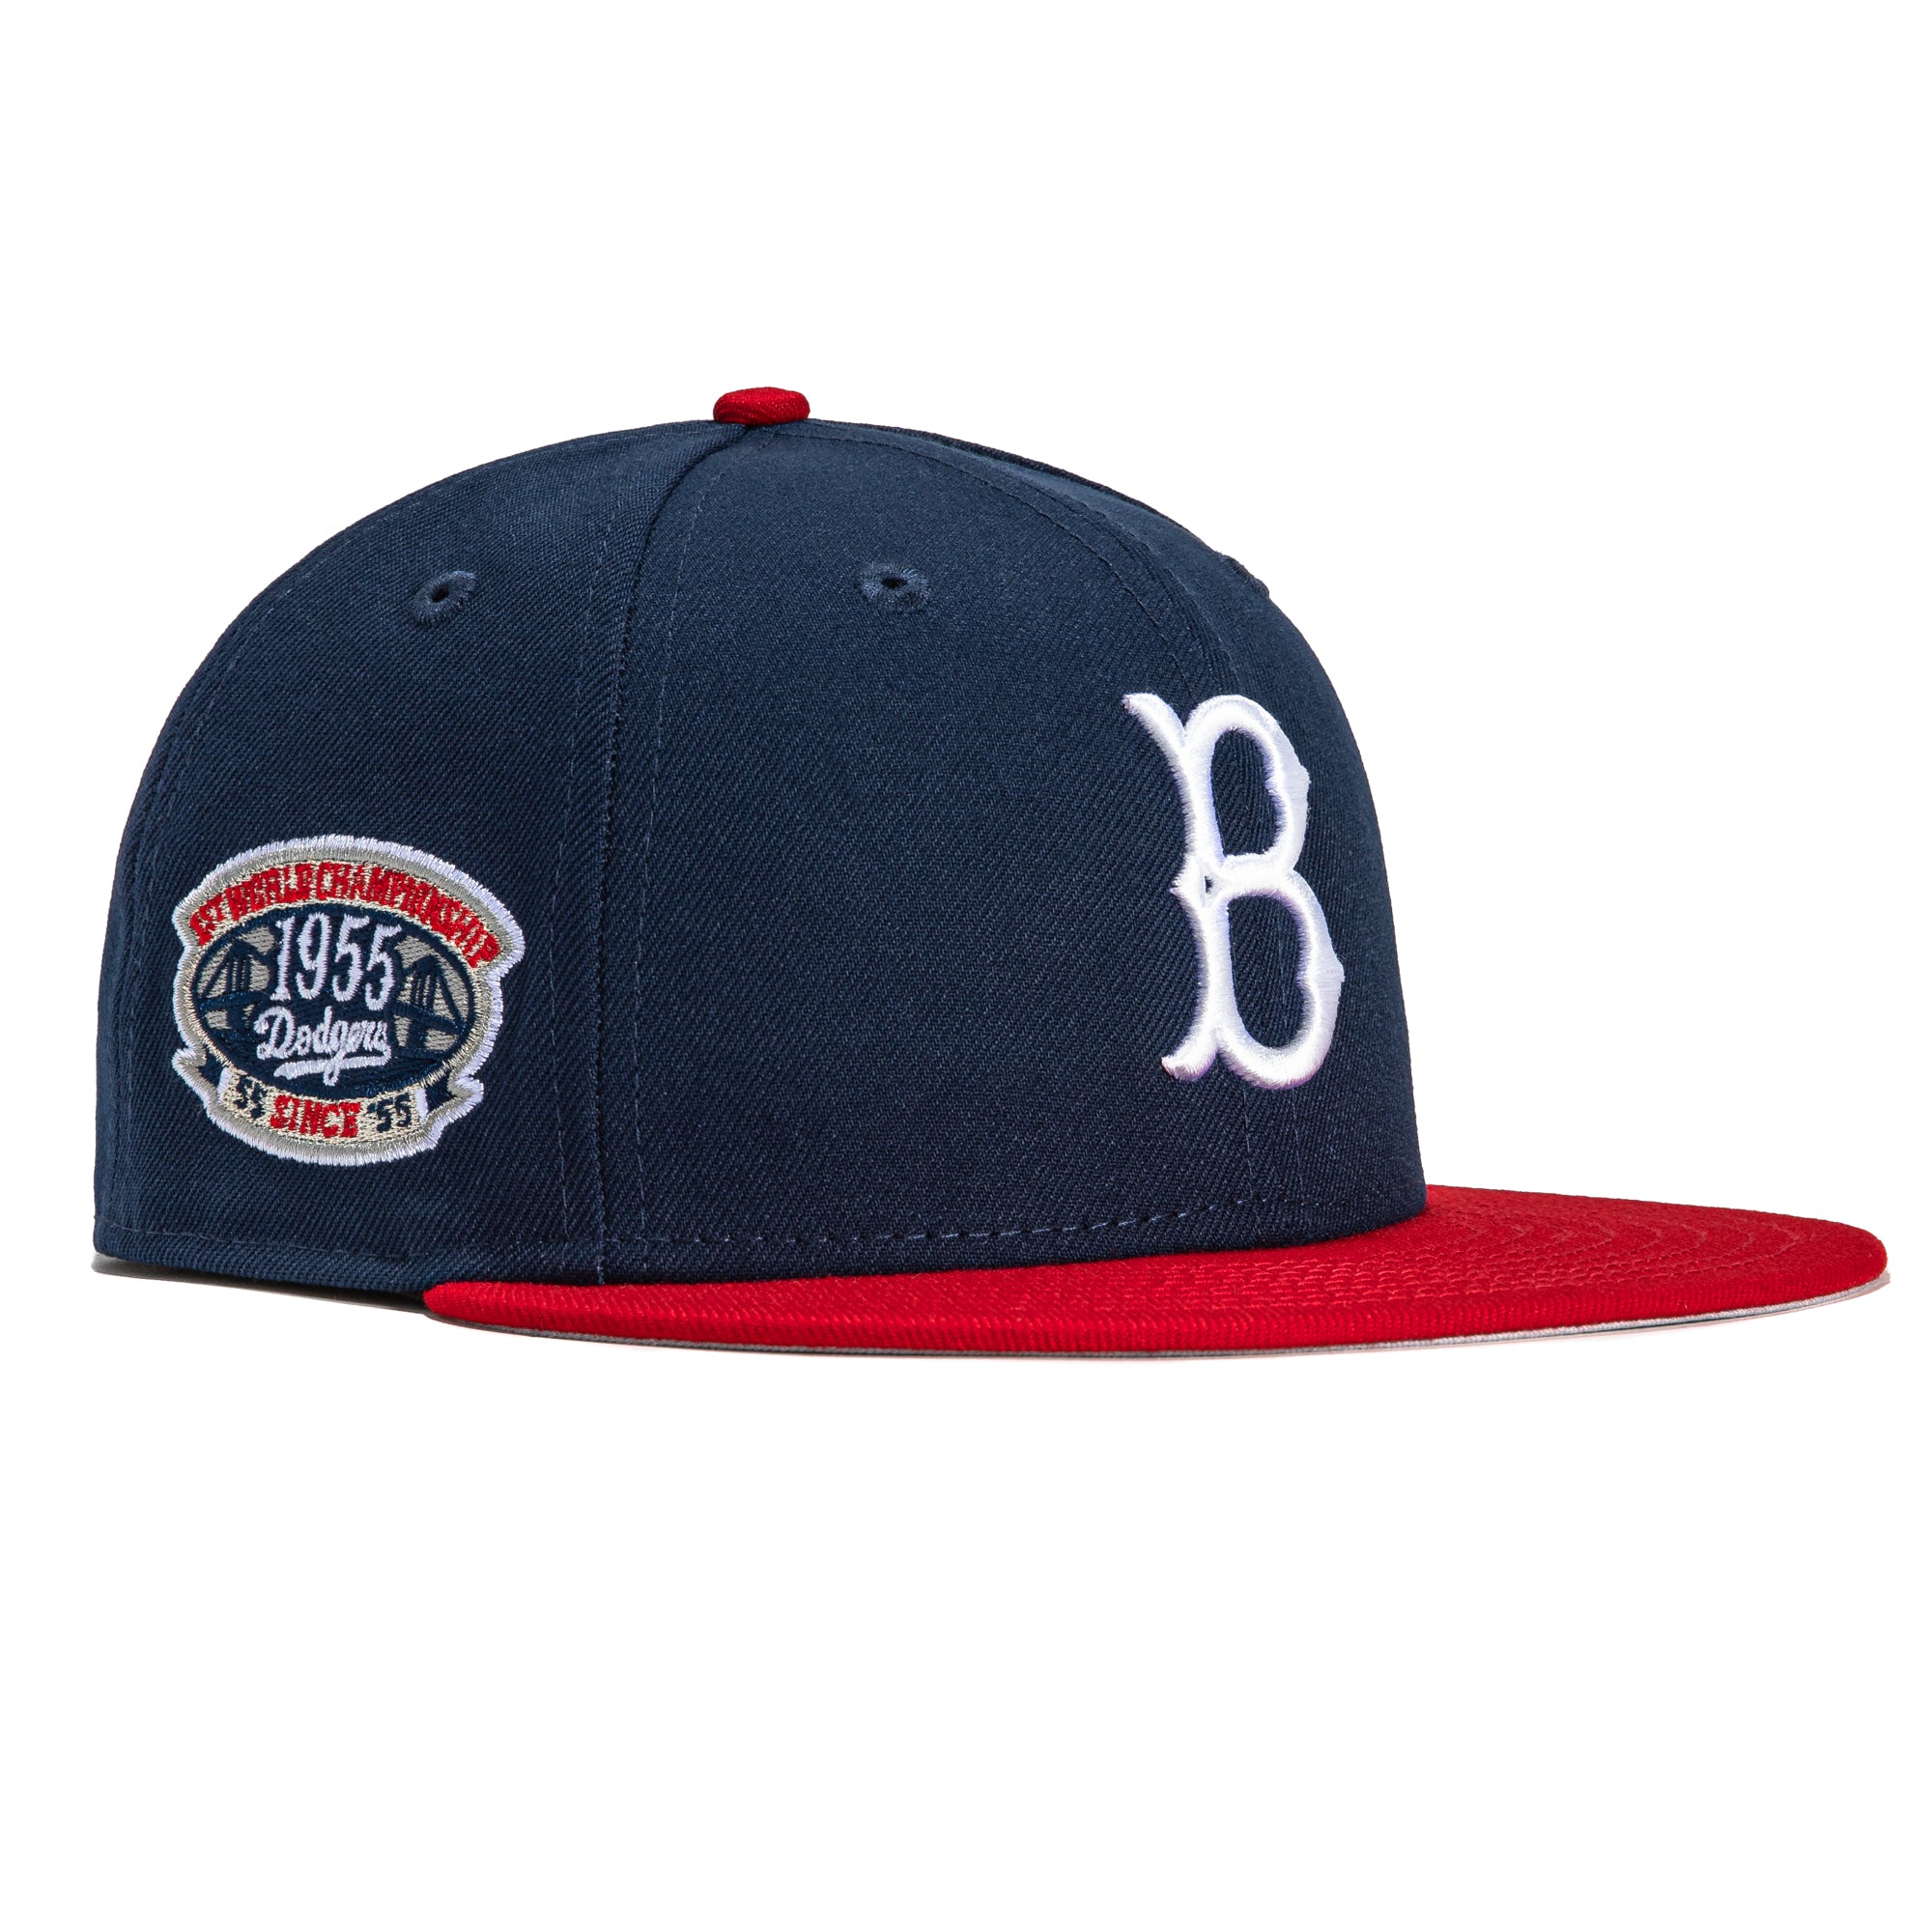 New Era 59Fifty Brooklyn Dodgers 1955 World Series Champions Patch Hat ...